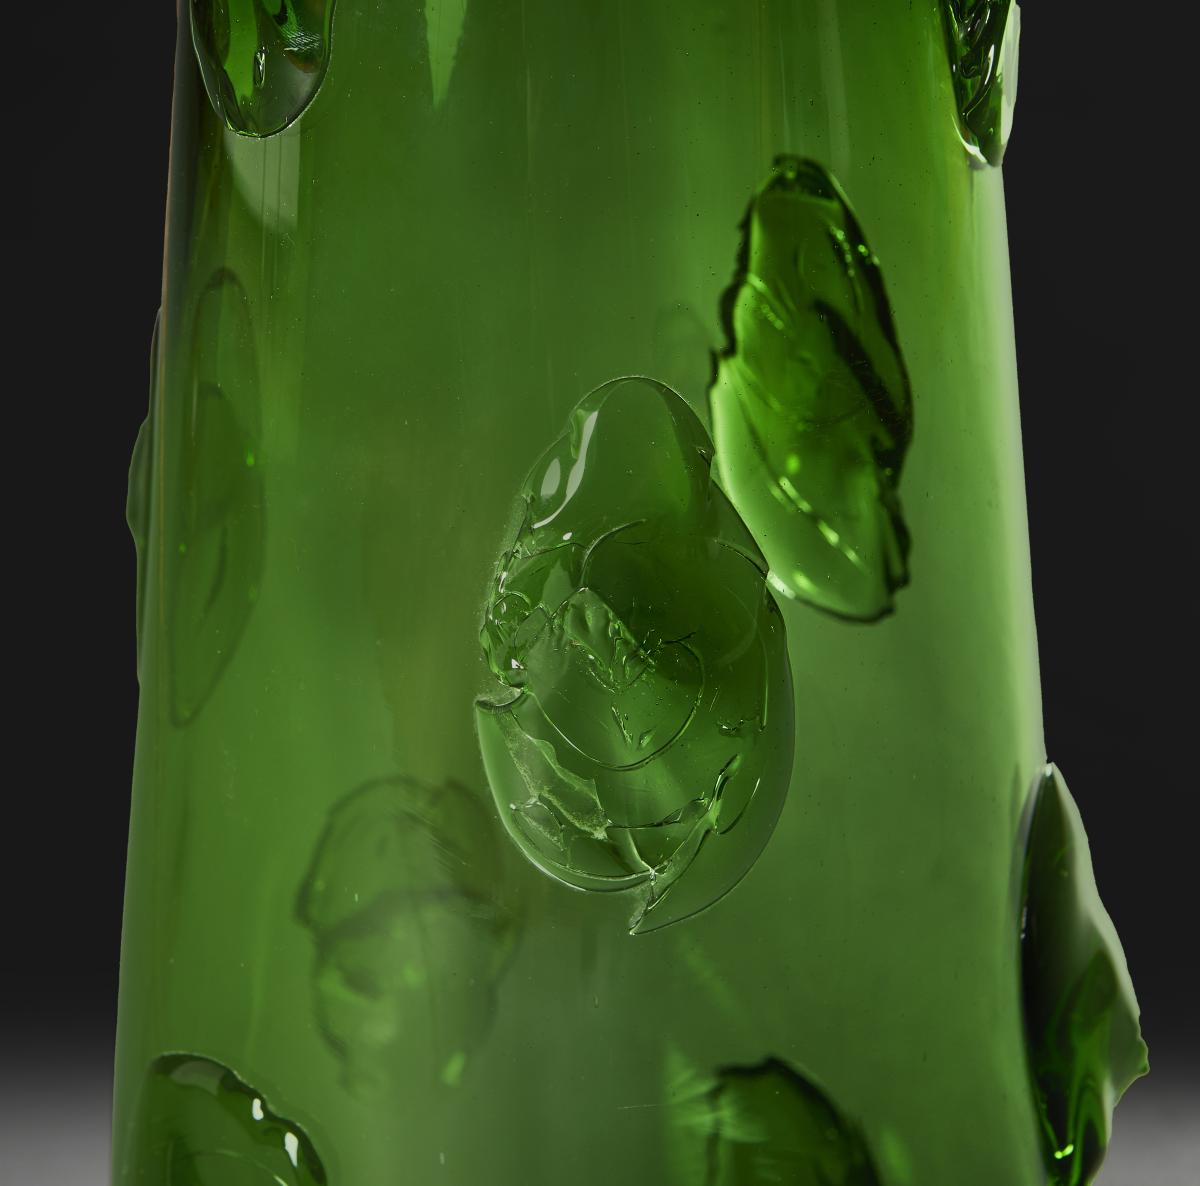 A Large Green Empoli Glass Lamp